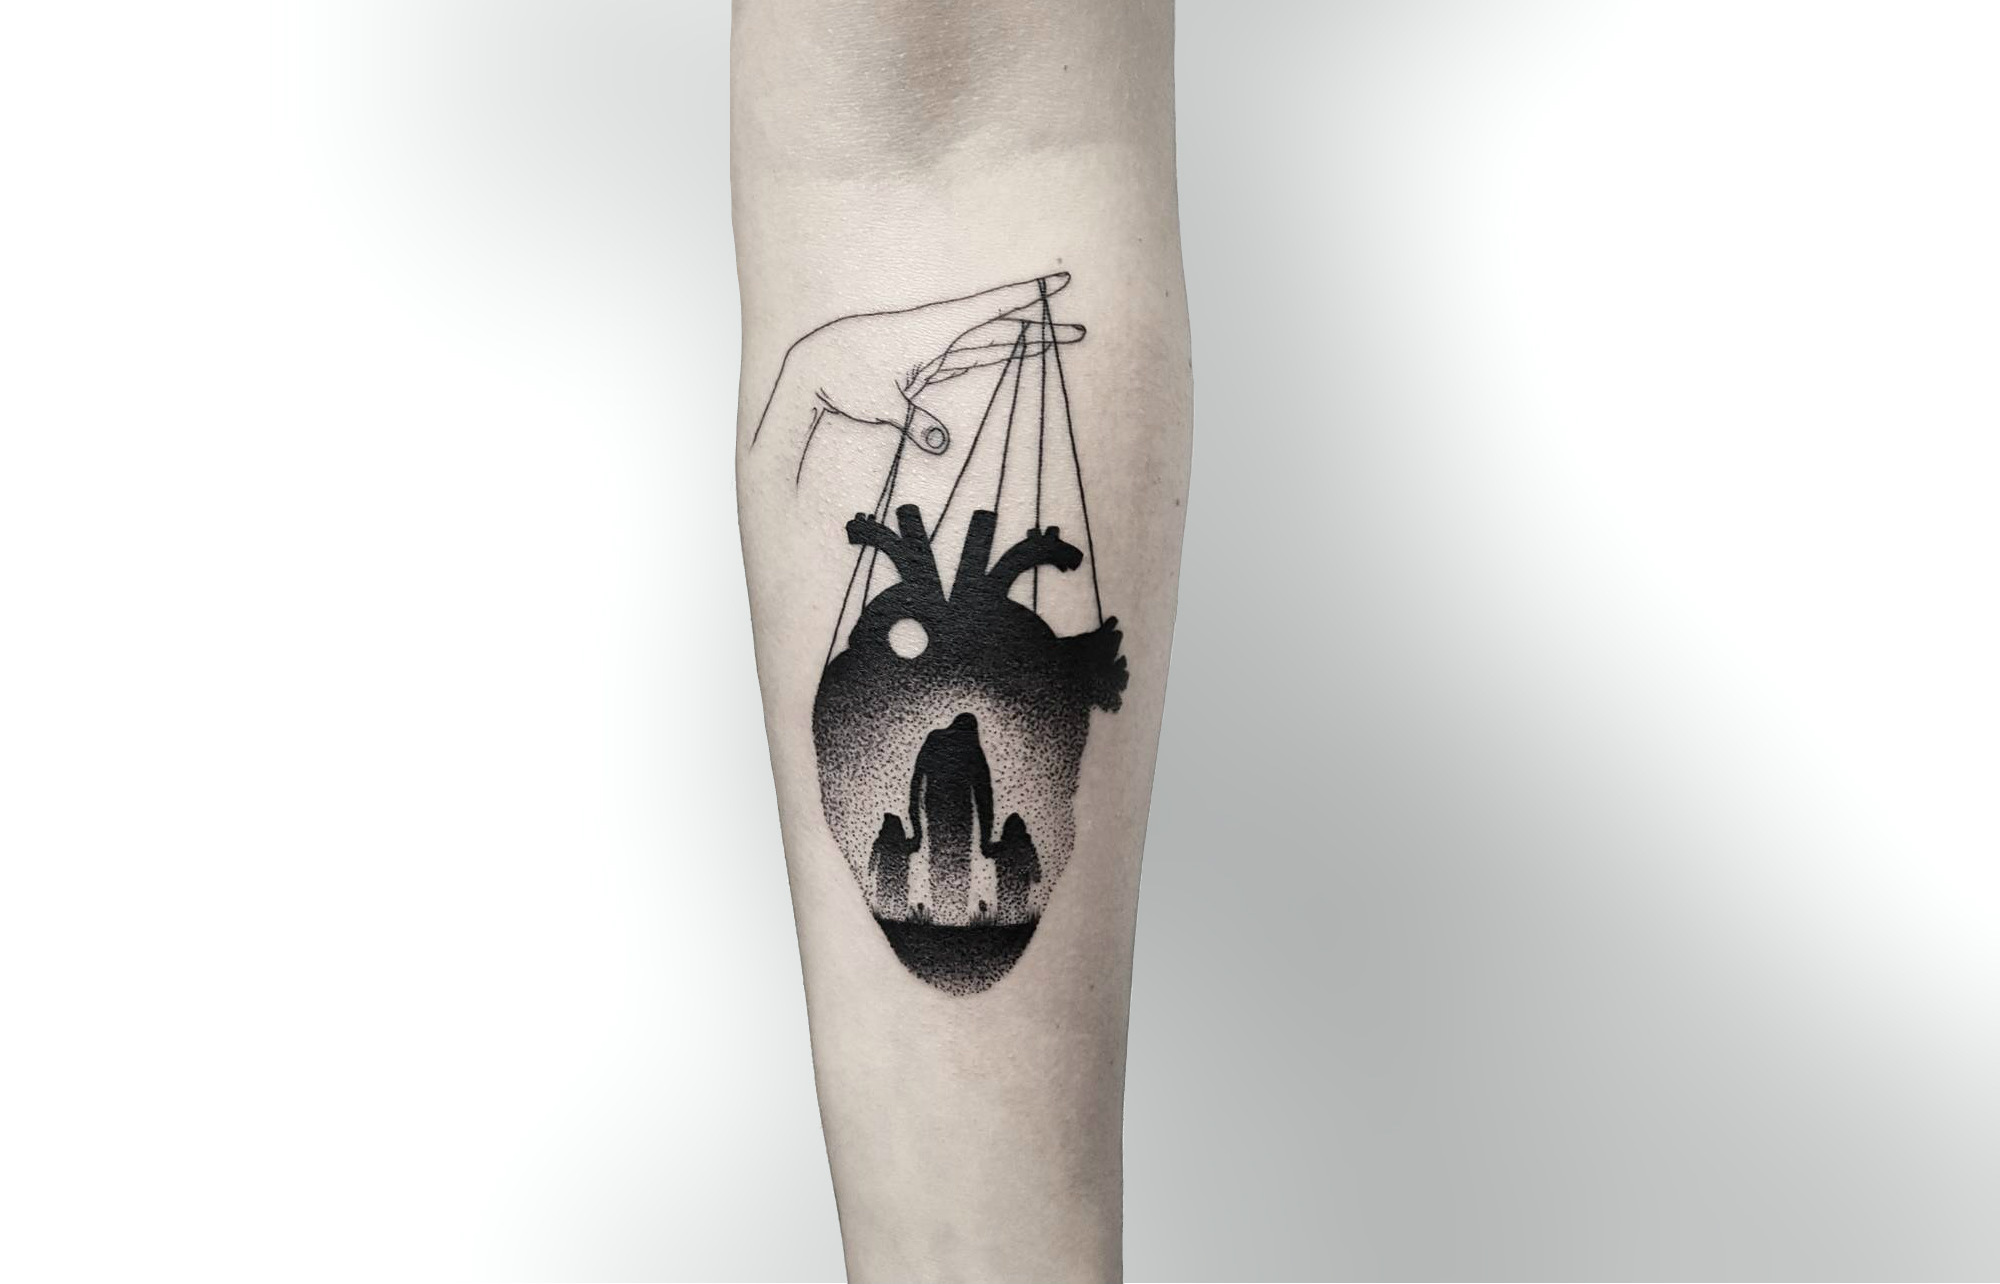 Fine line blackwork tattoo by Matteo Nangeroni